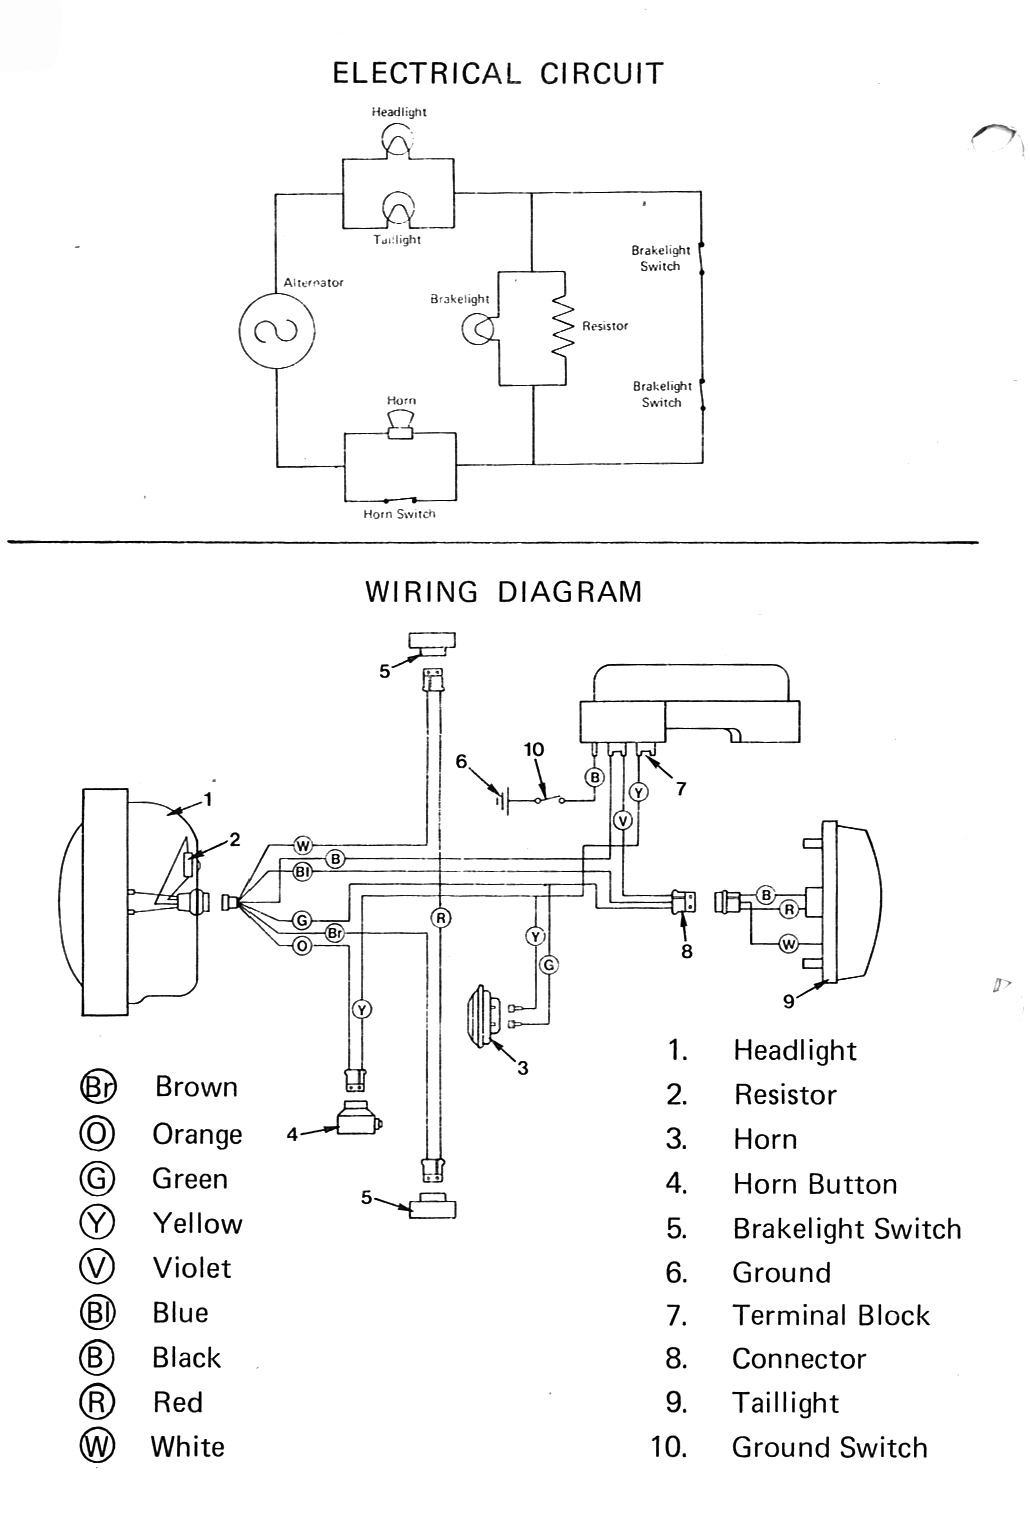 Diagram Vga Terminal Wiring Diagram Full Version Hd Quality Wiring Diagram Mediman Eurocast It